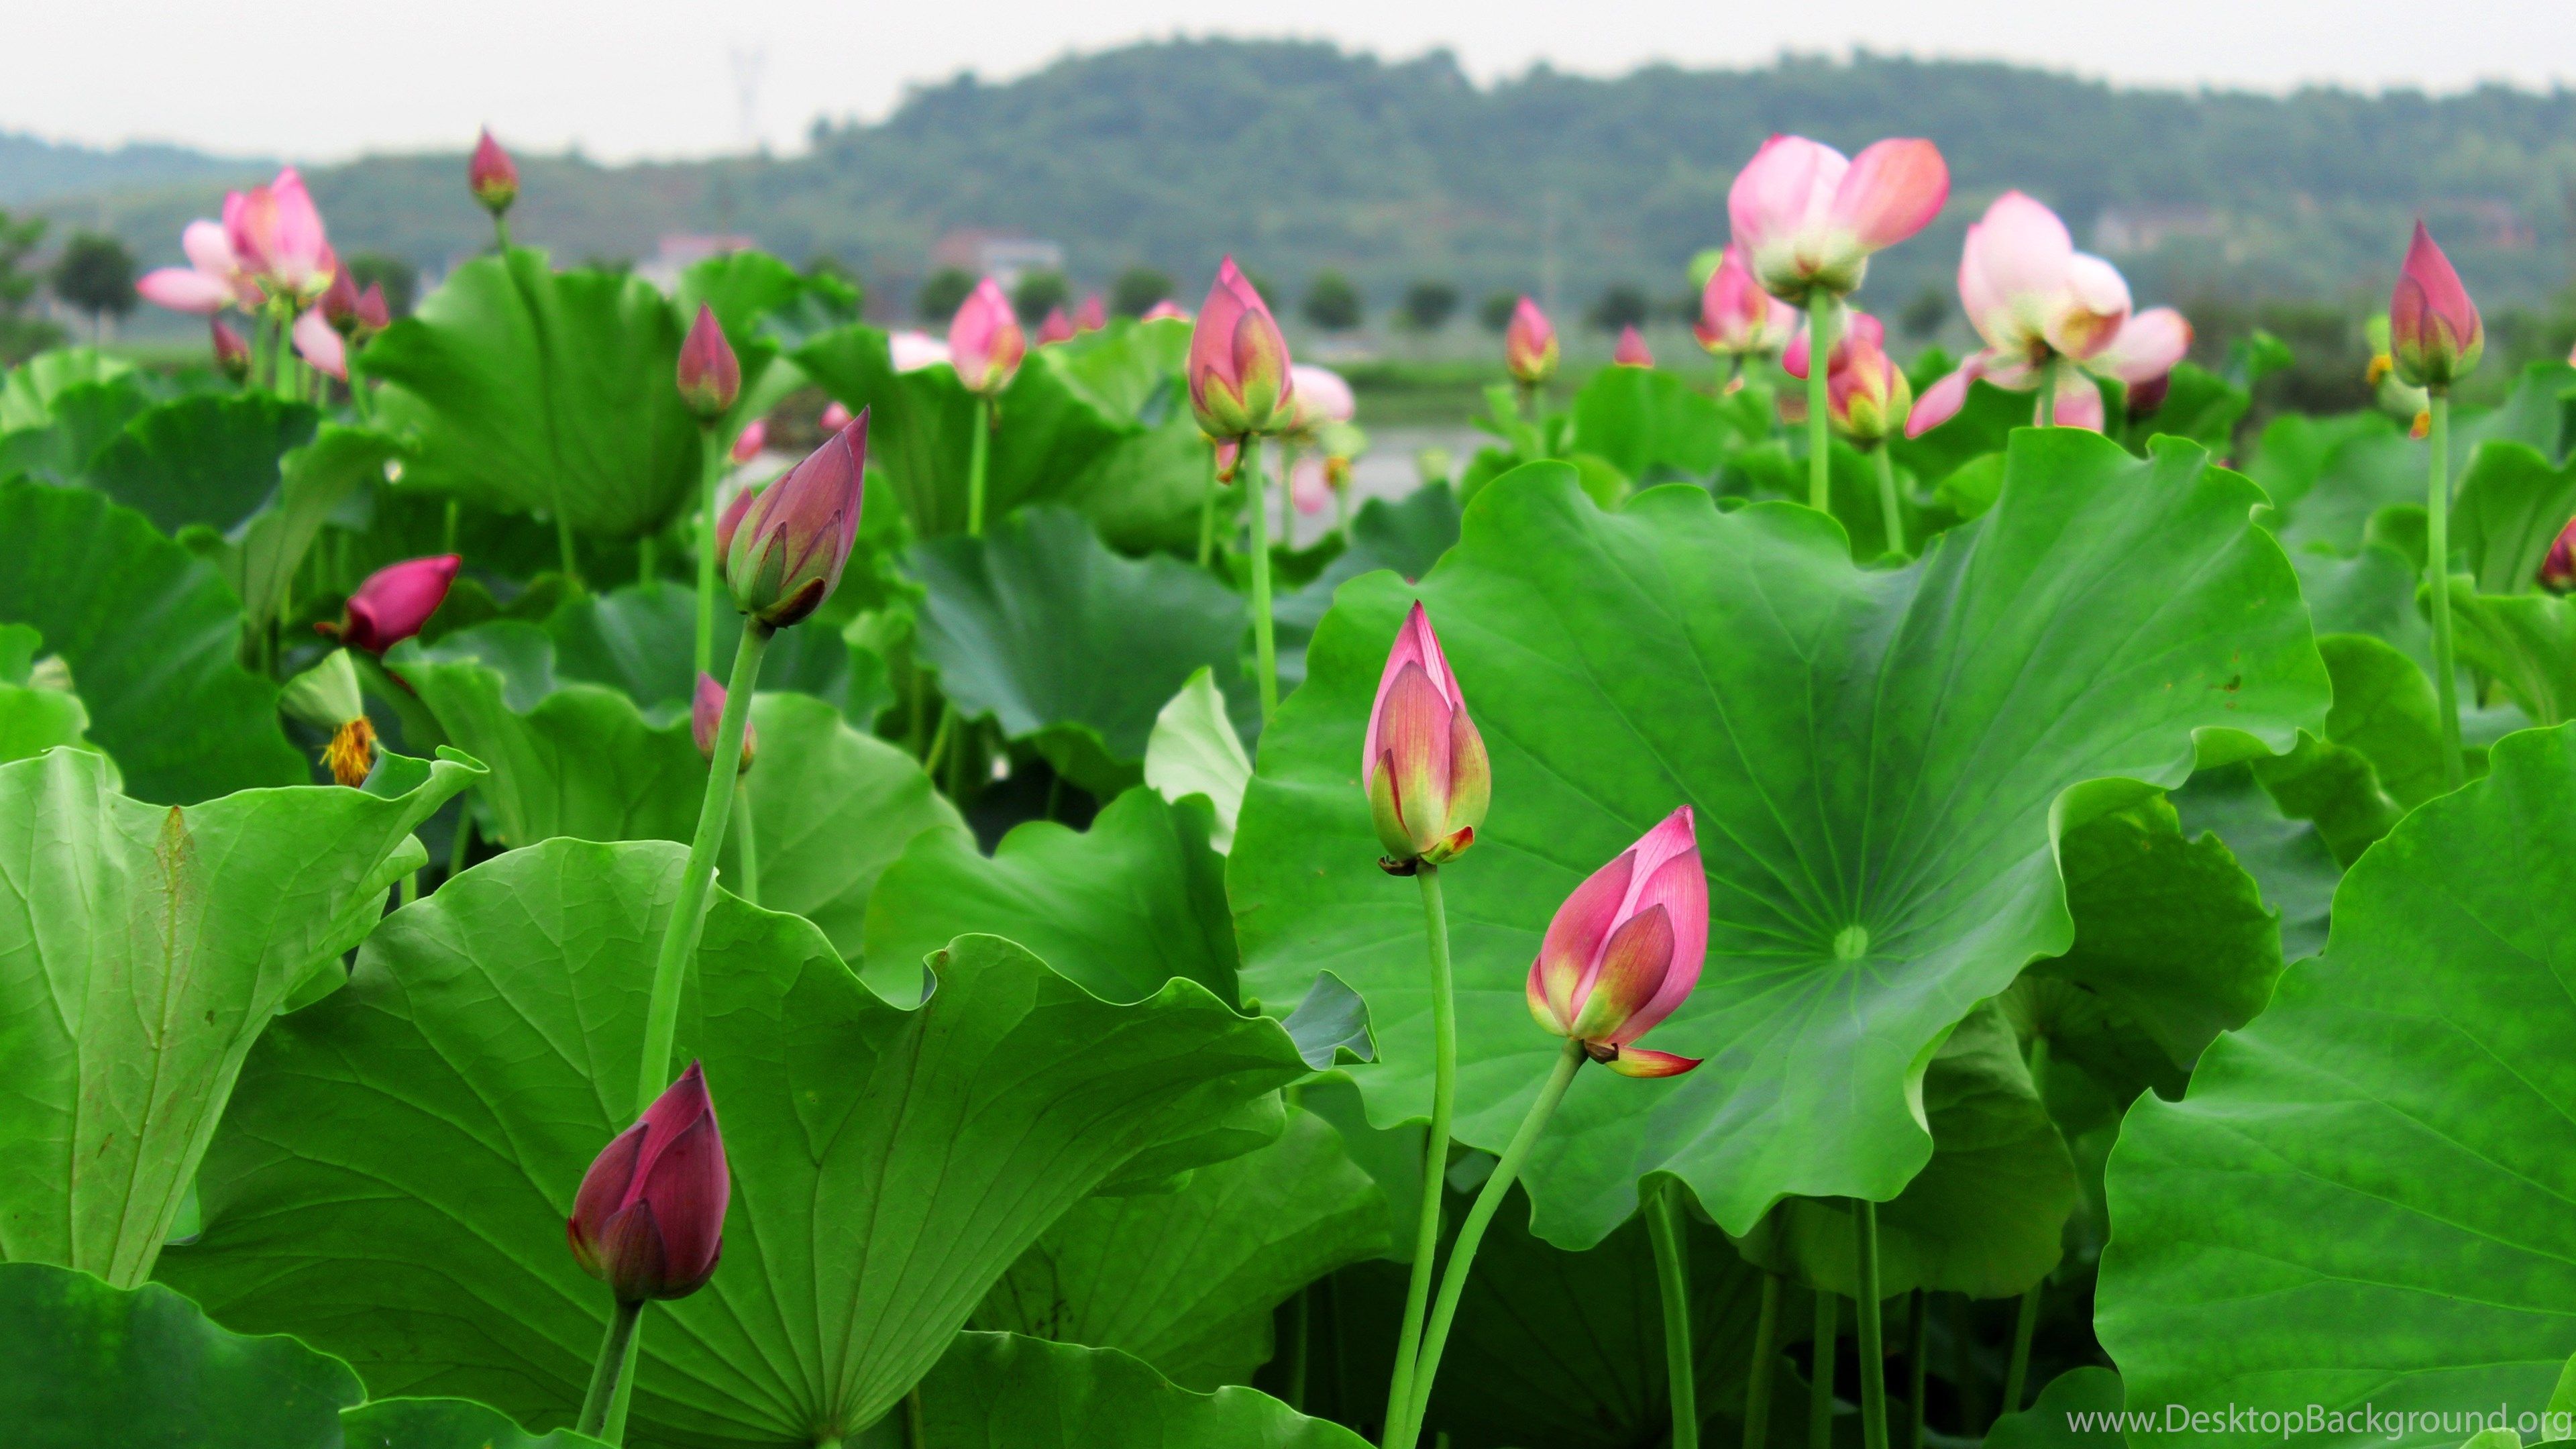 Summer Lotus Flower Wallpaper Lotus Flower Picture & Image Desktop Background